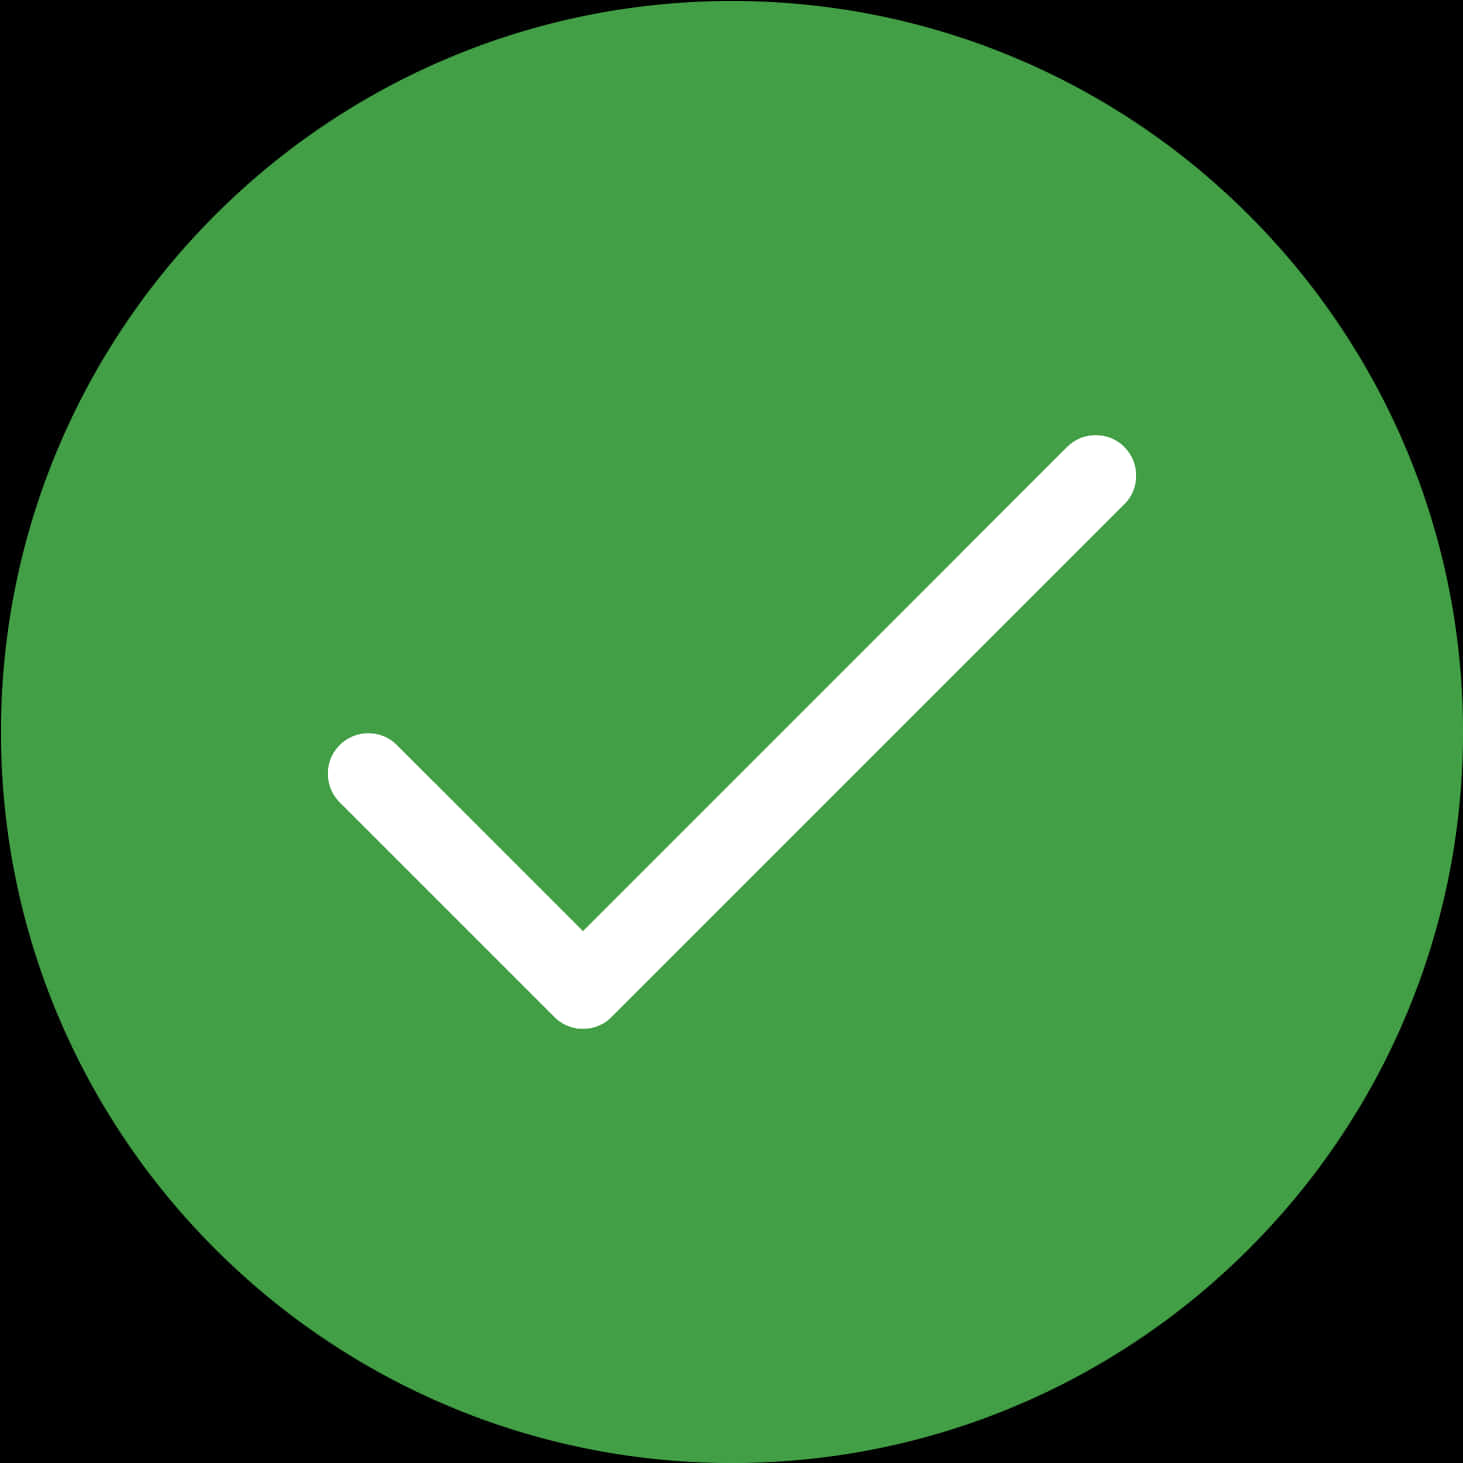 Green Check Mark Icon PNG image